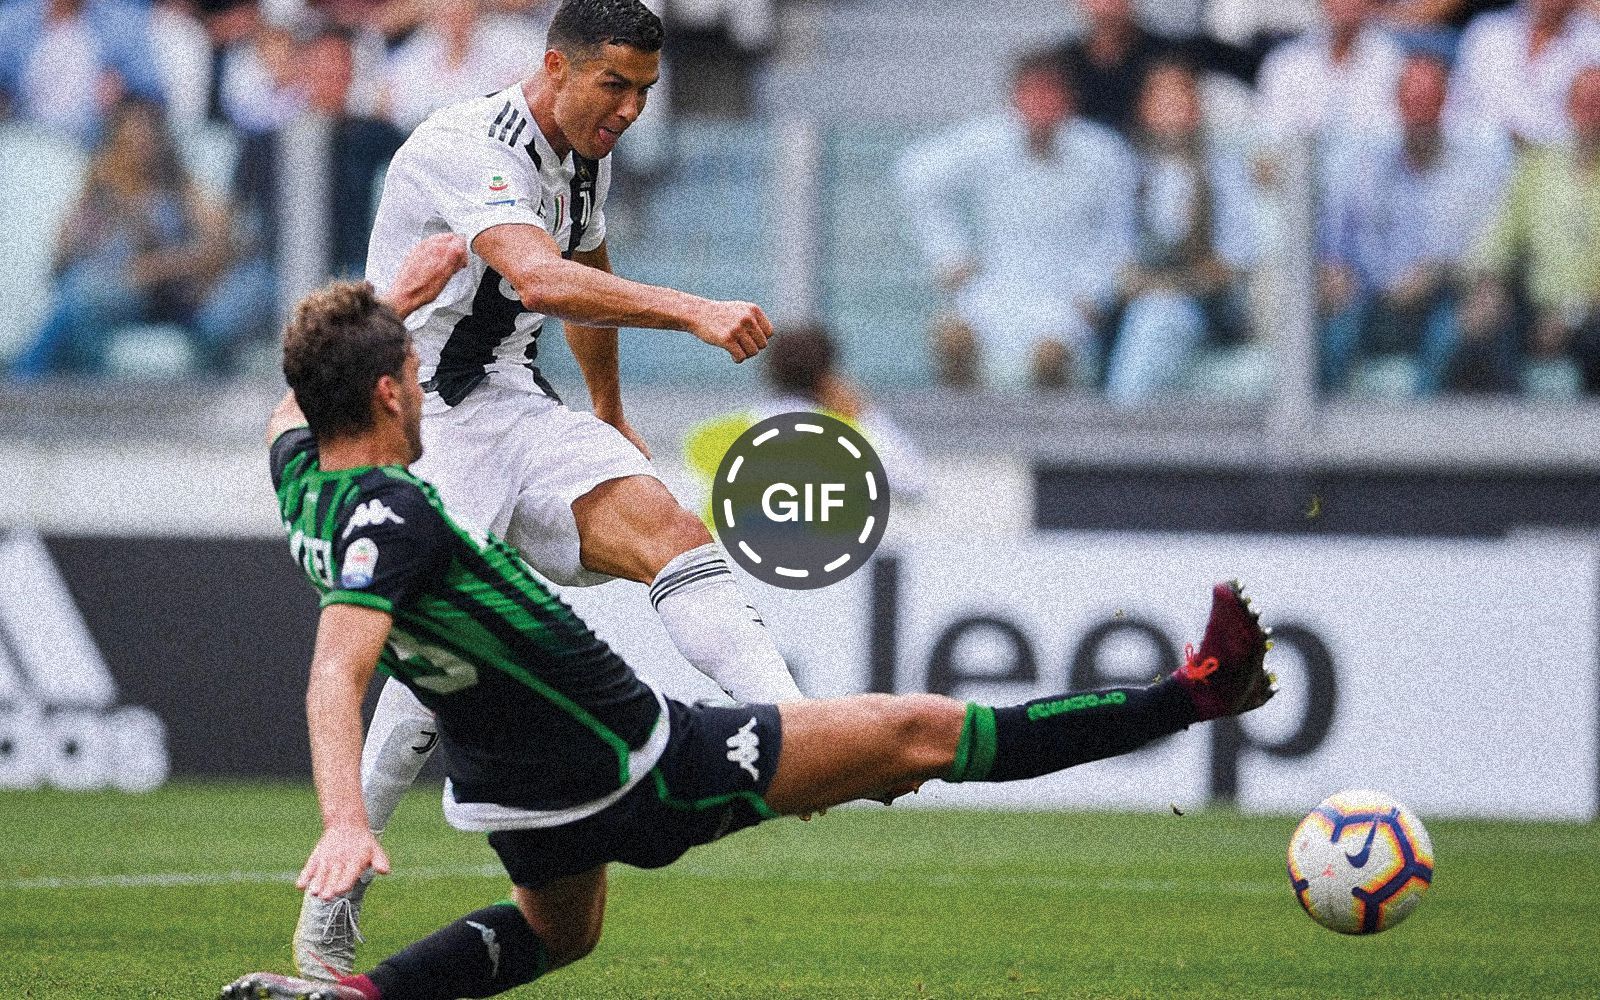 Cristiano Ronaldo GIFs! by Sports GIFs